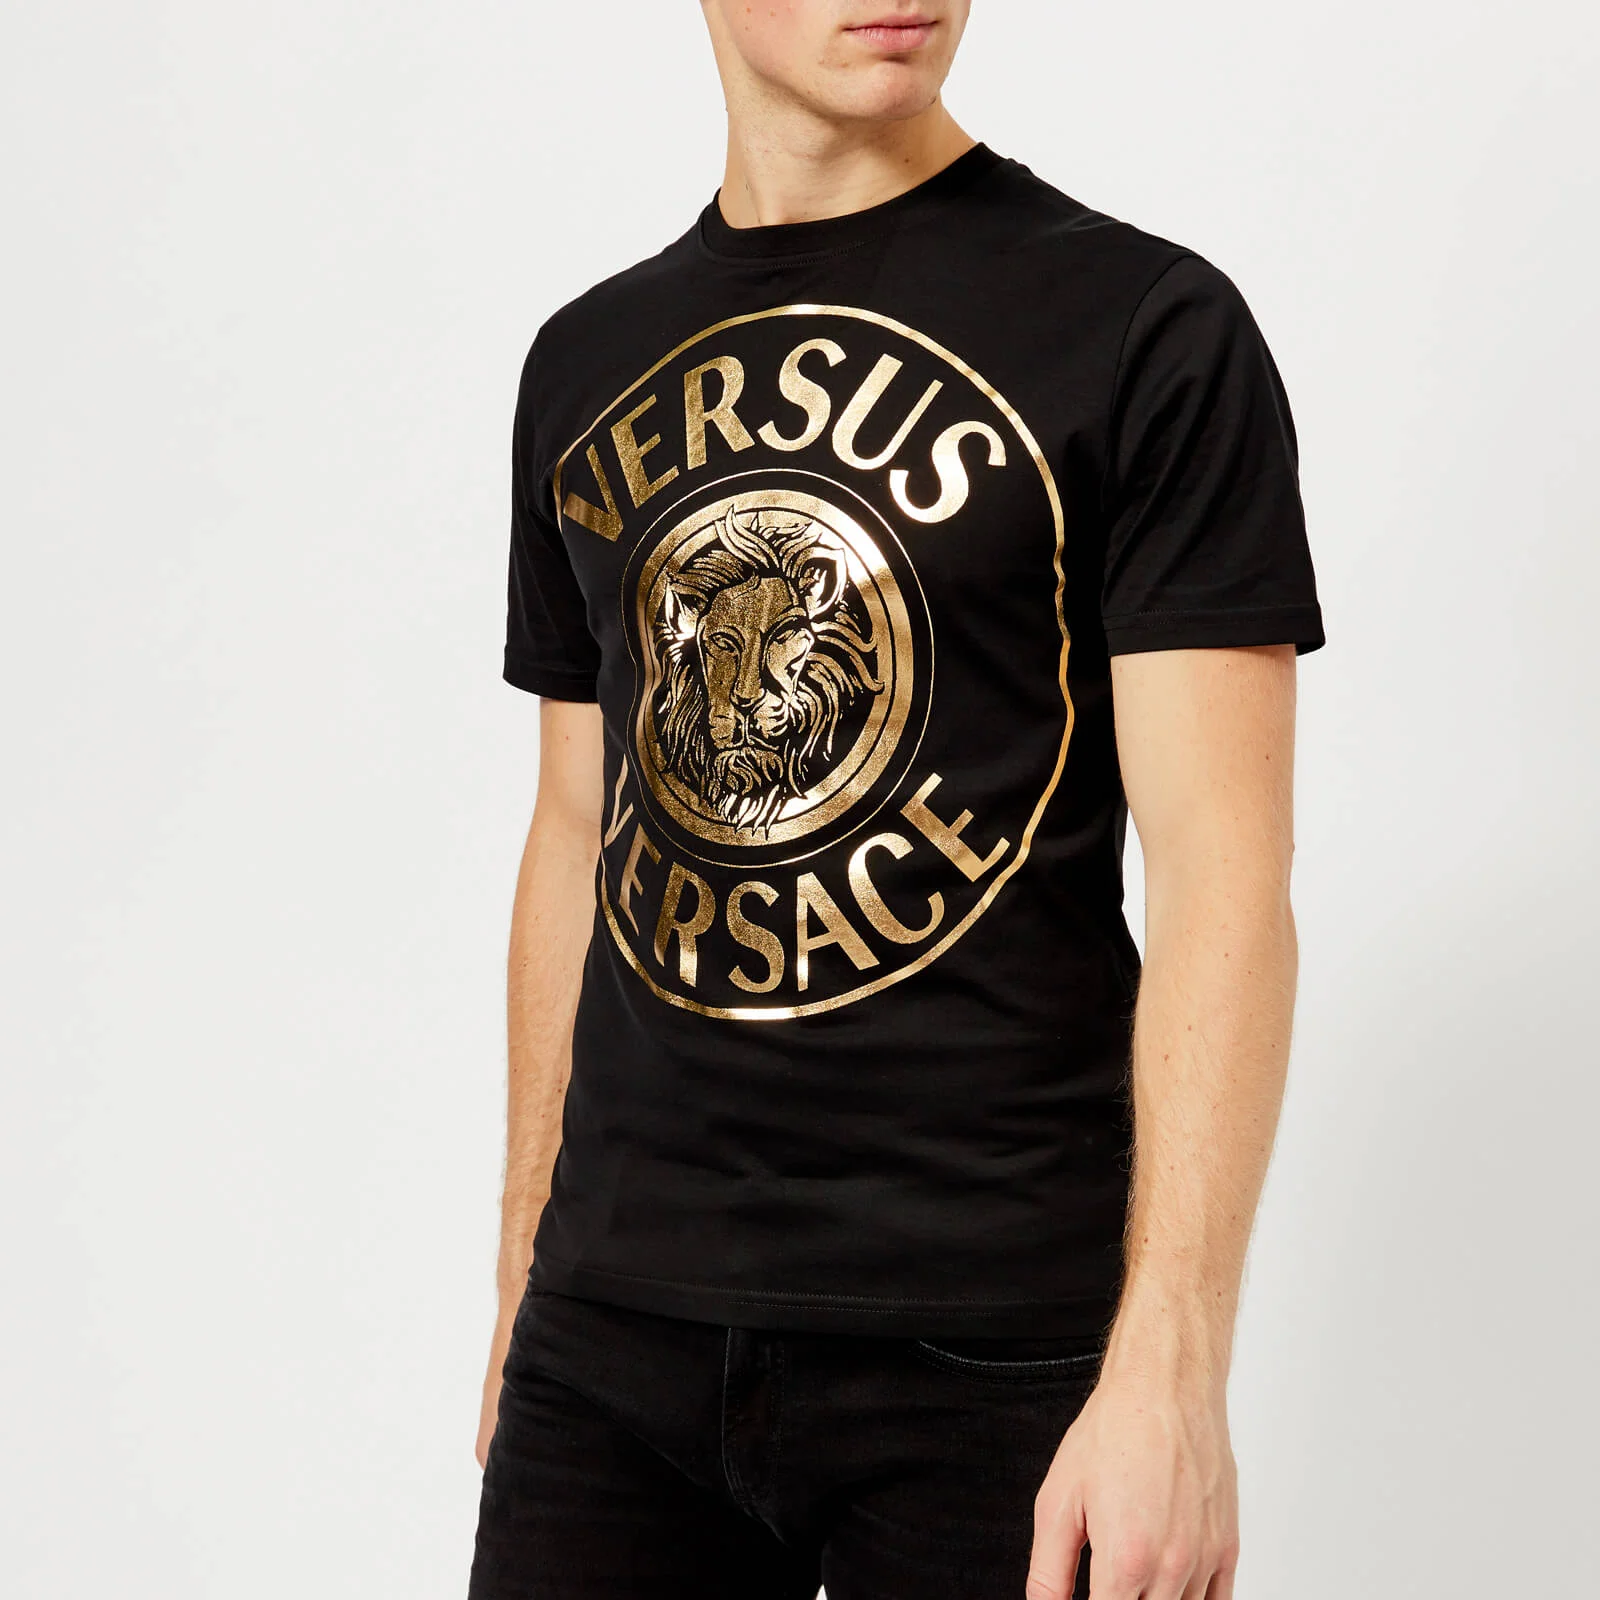 Versus Versace Men's Round Logo T-Shirt - Black/Gold Image 1